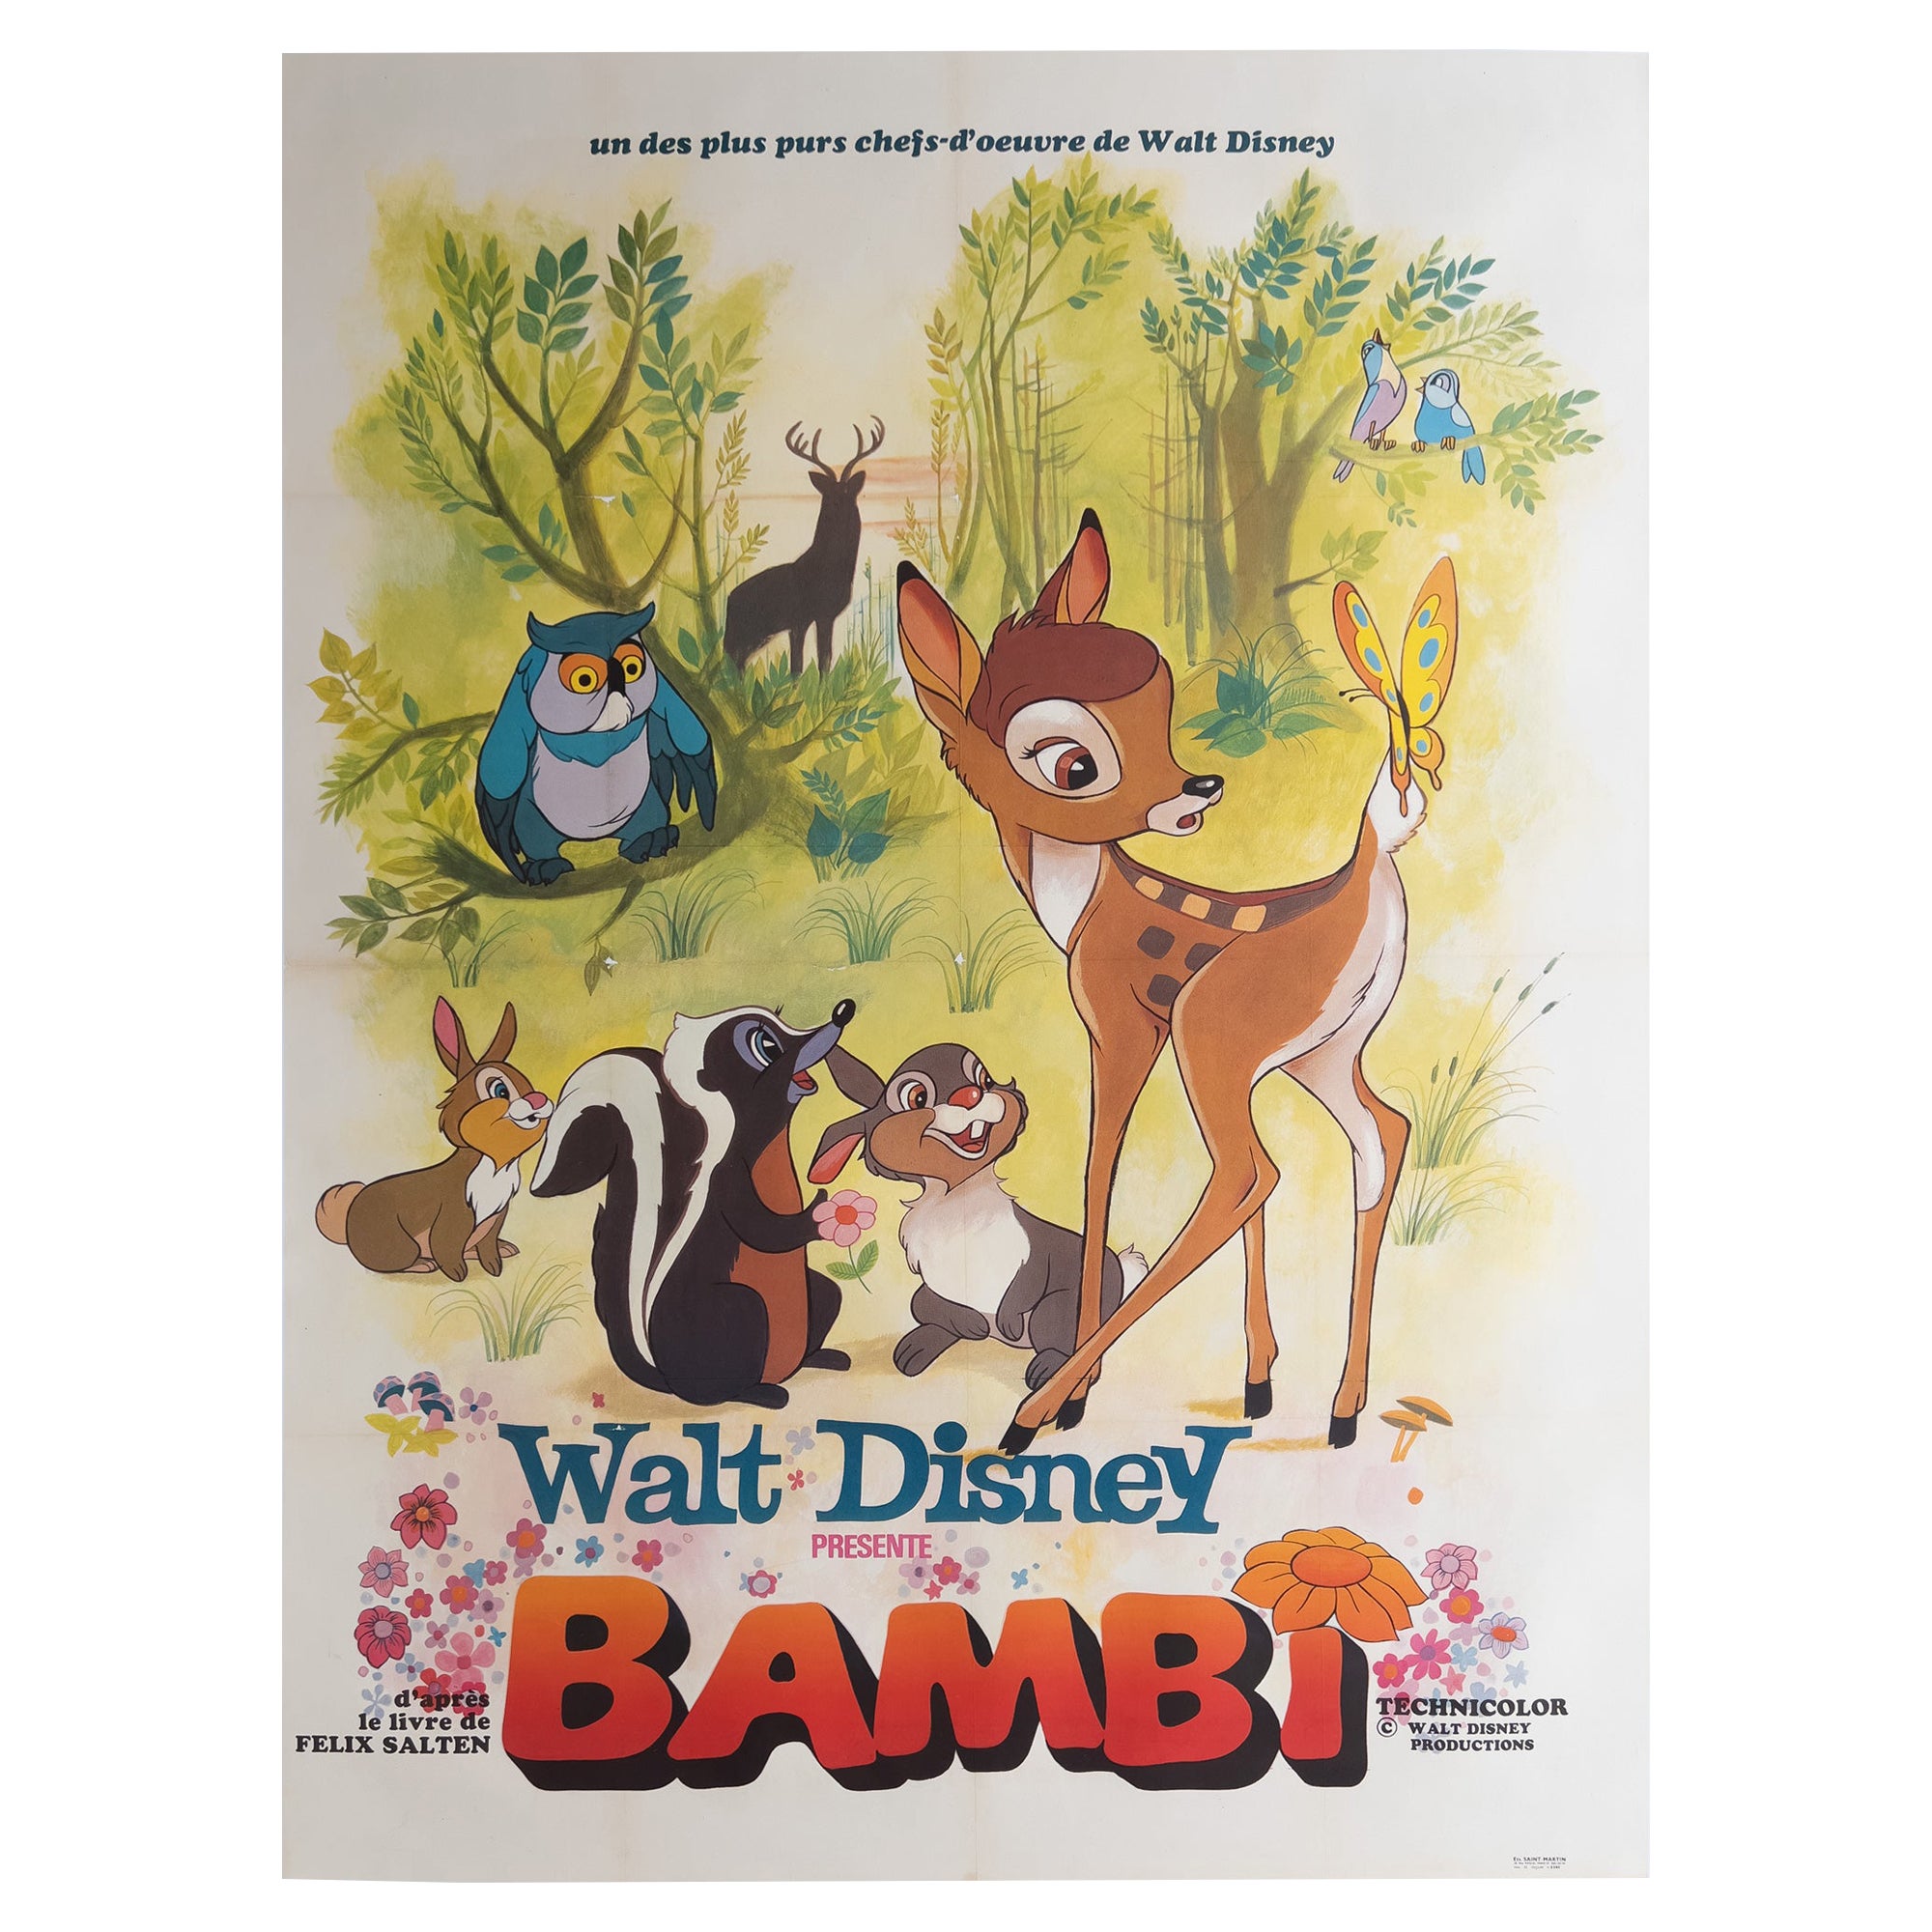 Bambi 1960s French Grande Film Movie Poster, Disney For Sale